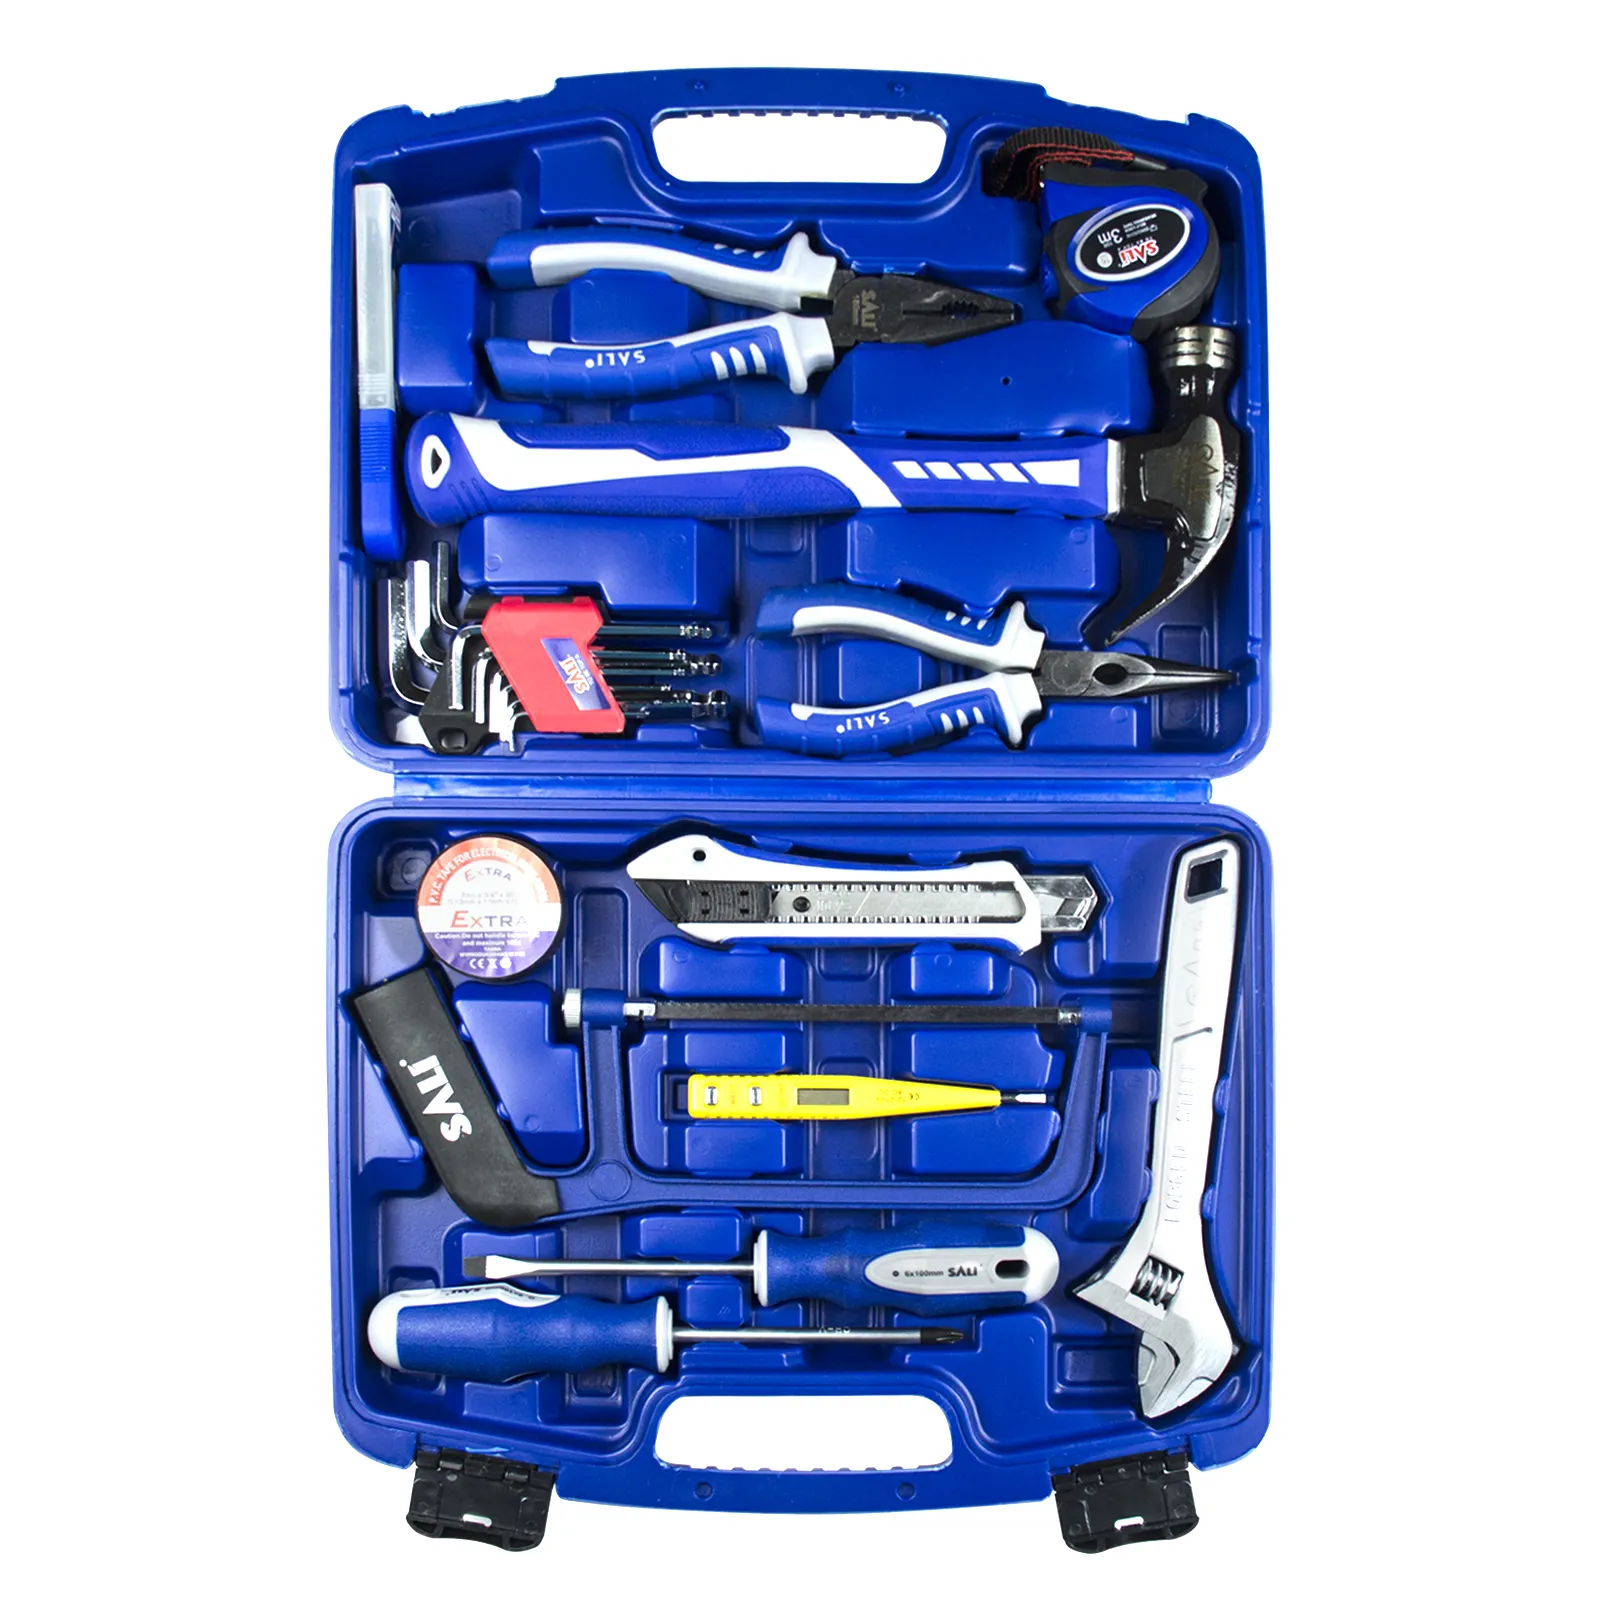 SALI Brand High Quality ferramentas household Hand Tools Set box herramientas